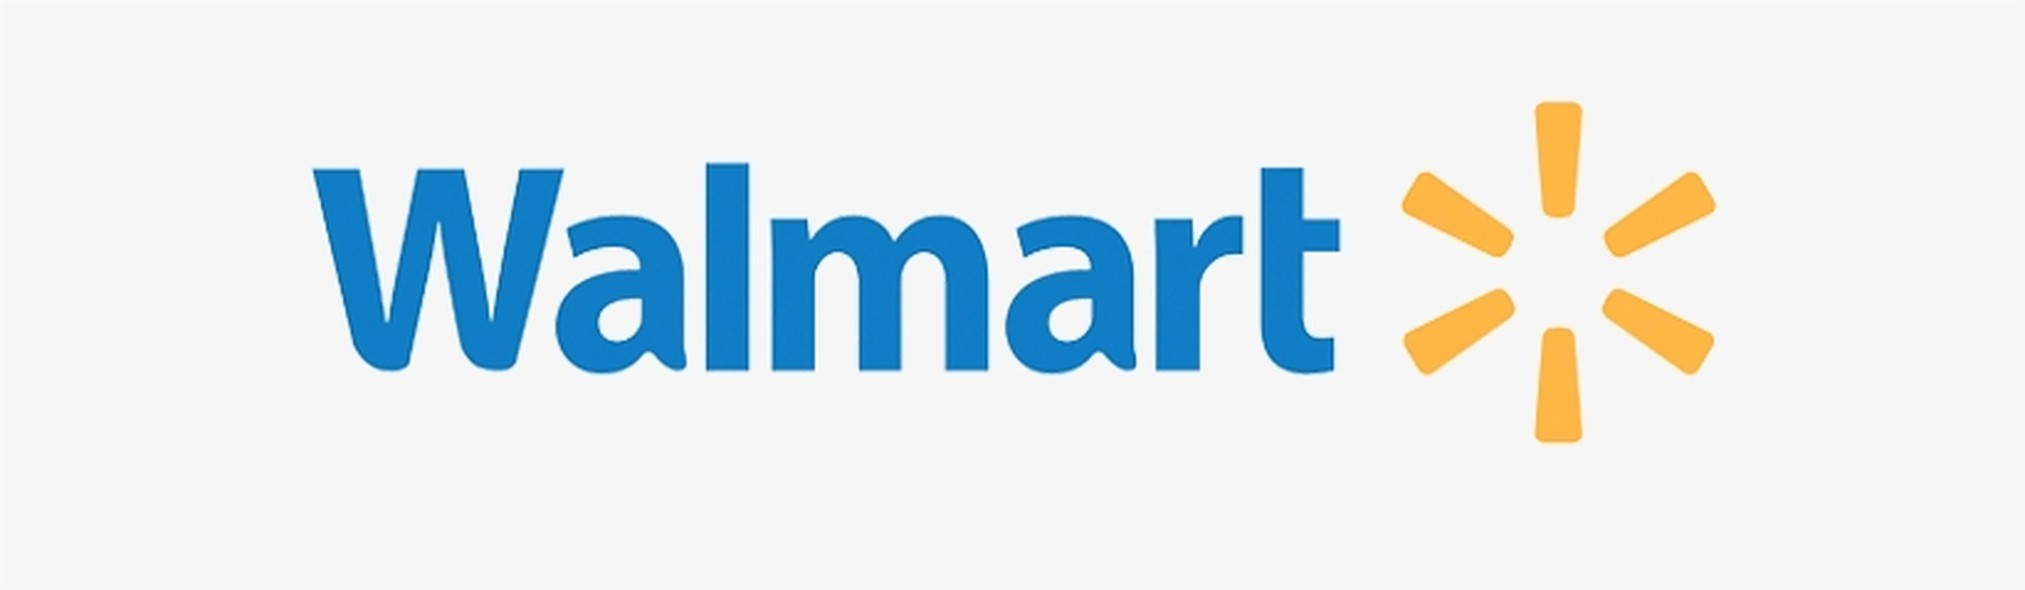 Simplistic Walmart Logo Wallpaper